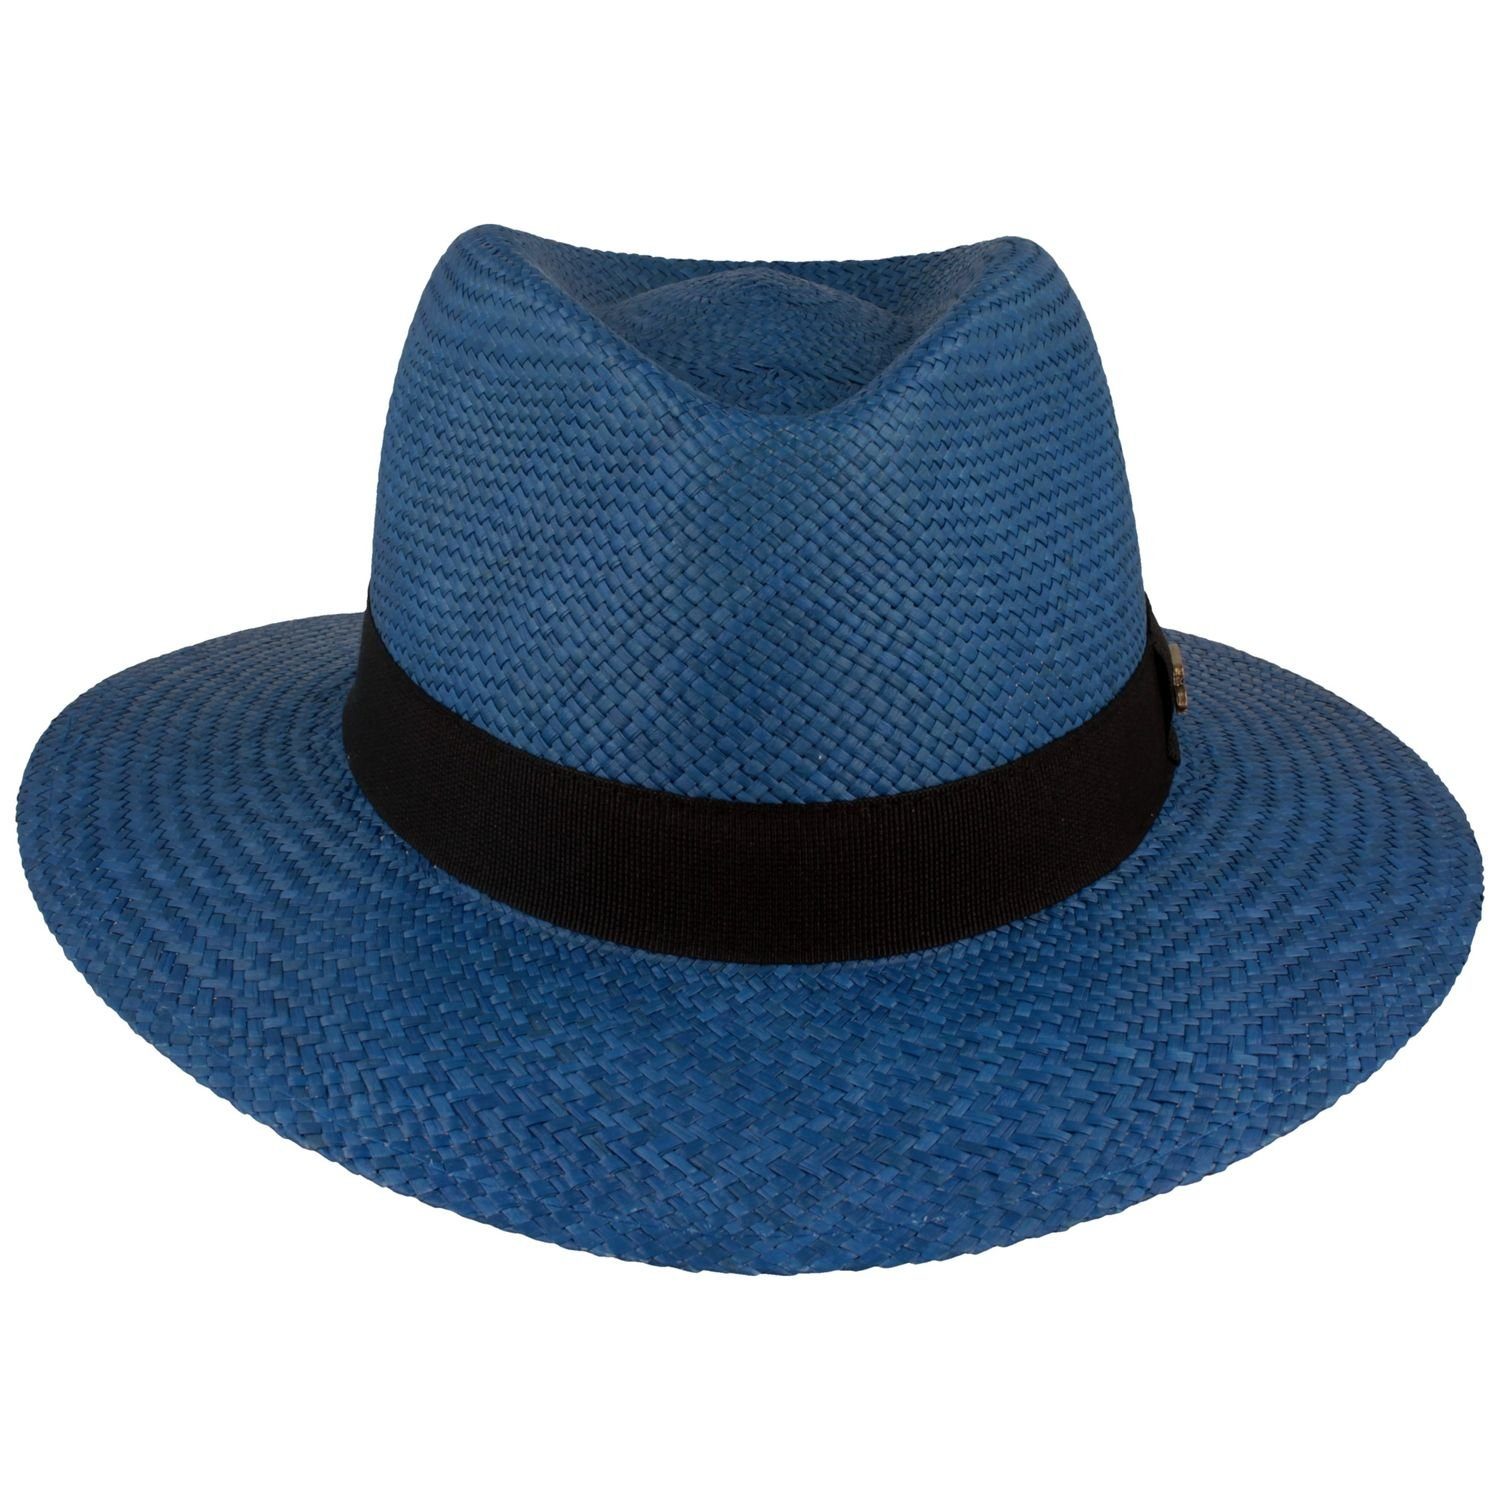 Breiter 50+ Eleganter Panama original UV-Schutz blau Strohhut Hut